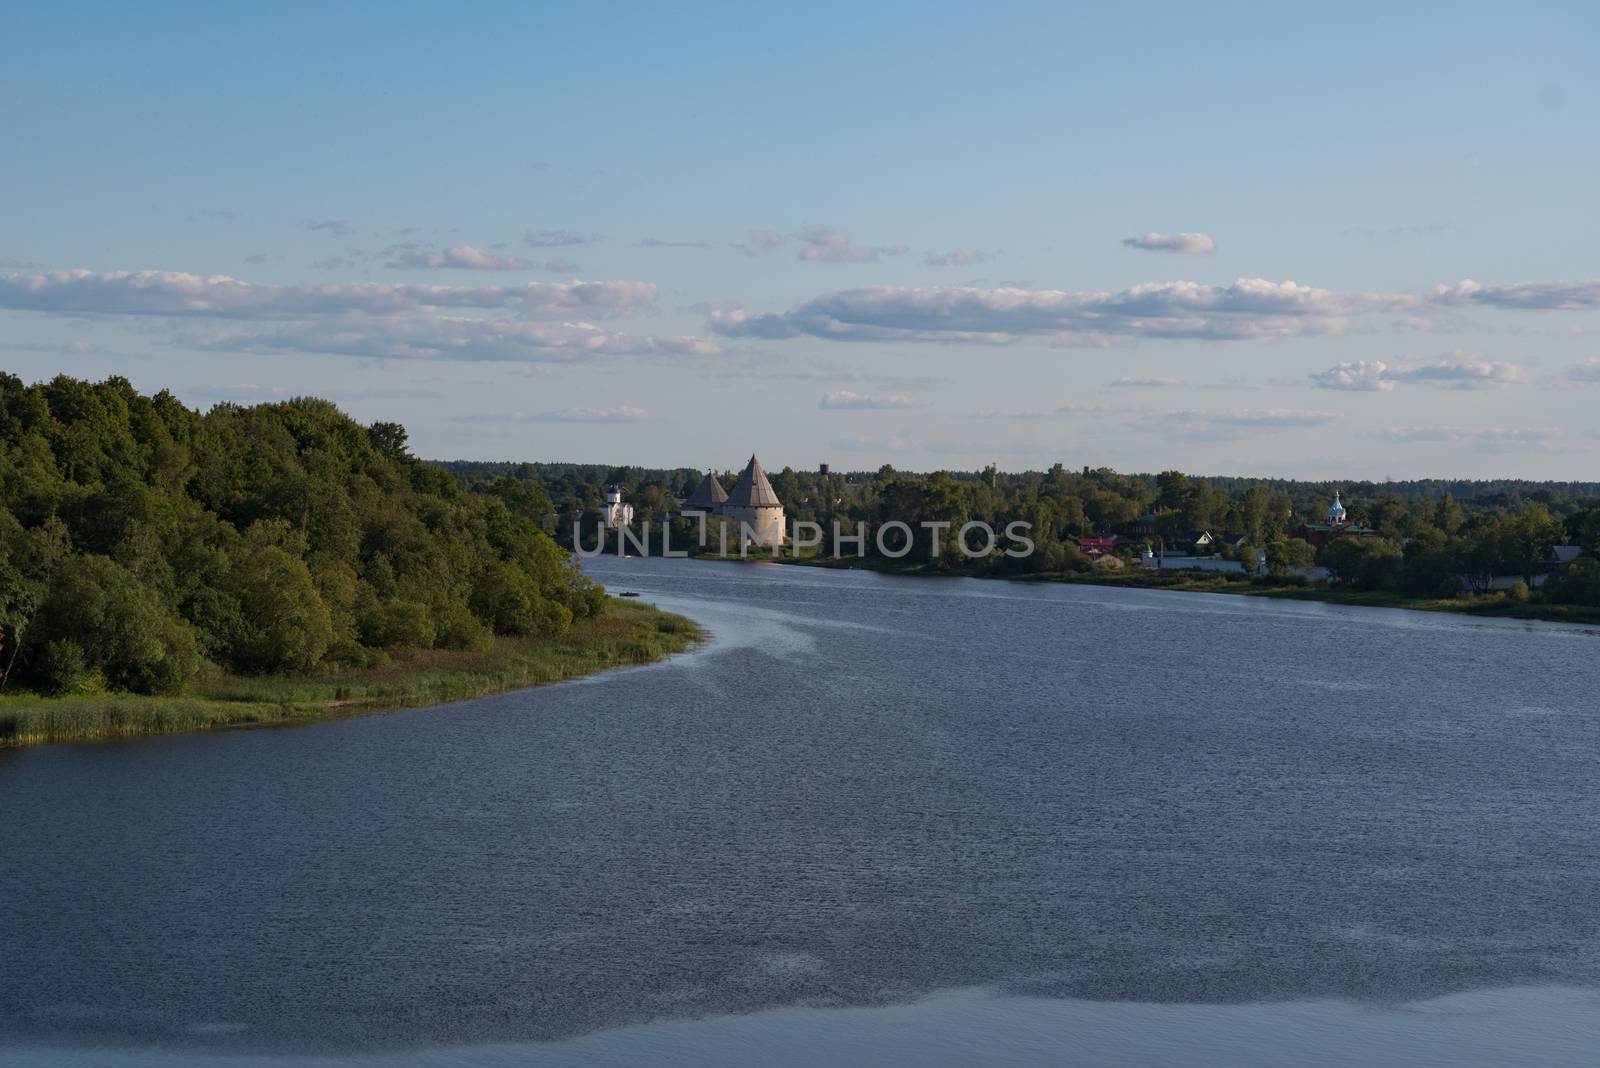 View from Volkhov river to medieval Staraya Ladoga Fortress, Leningrad region, Russia